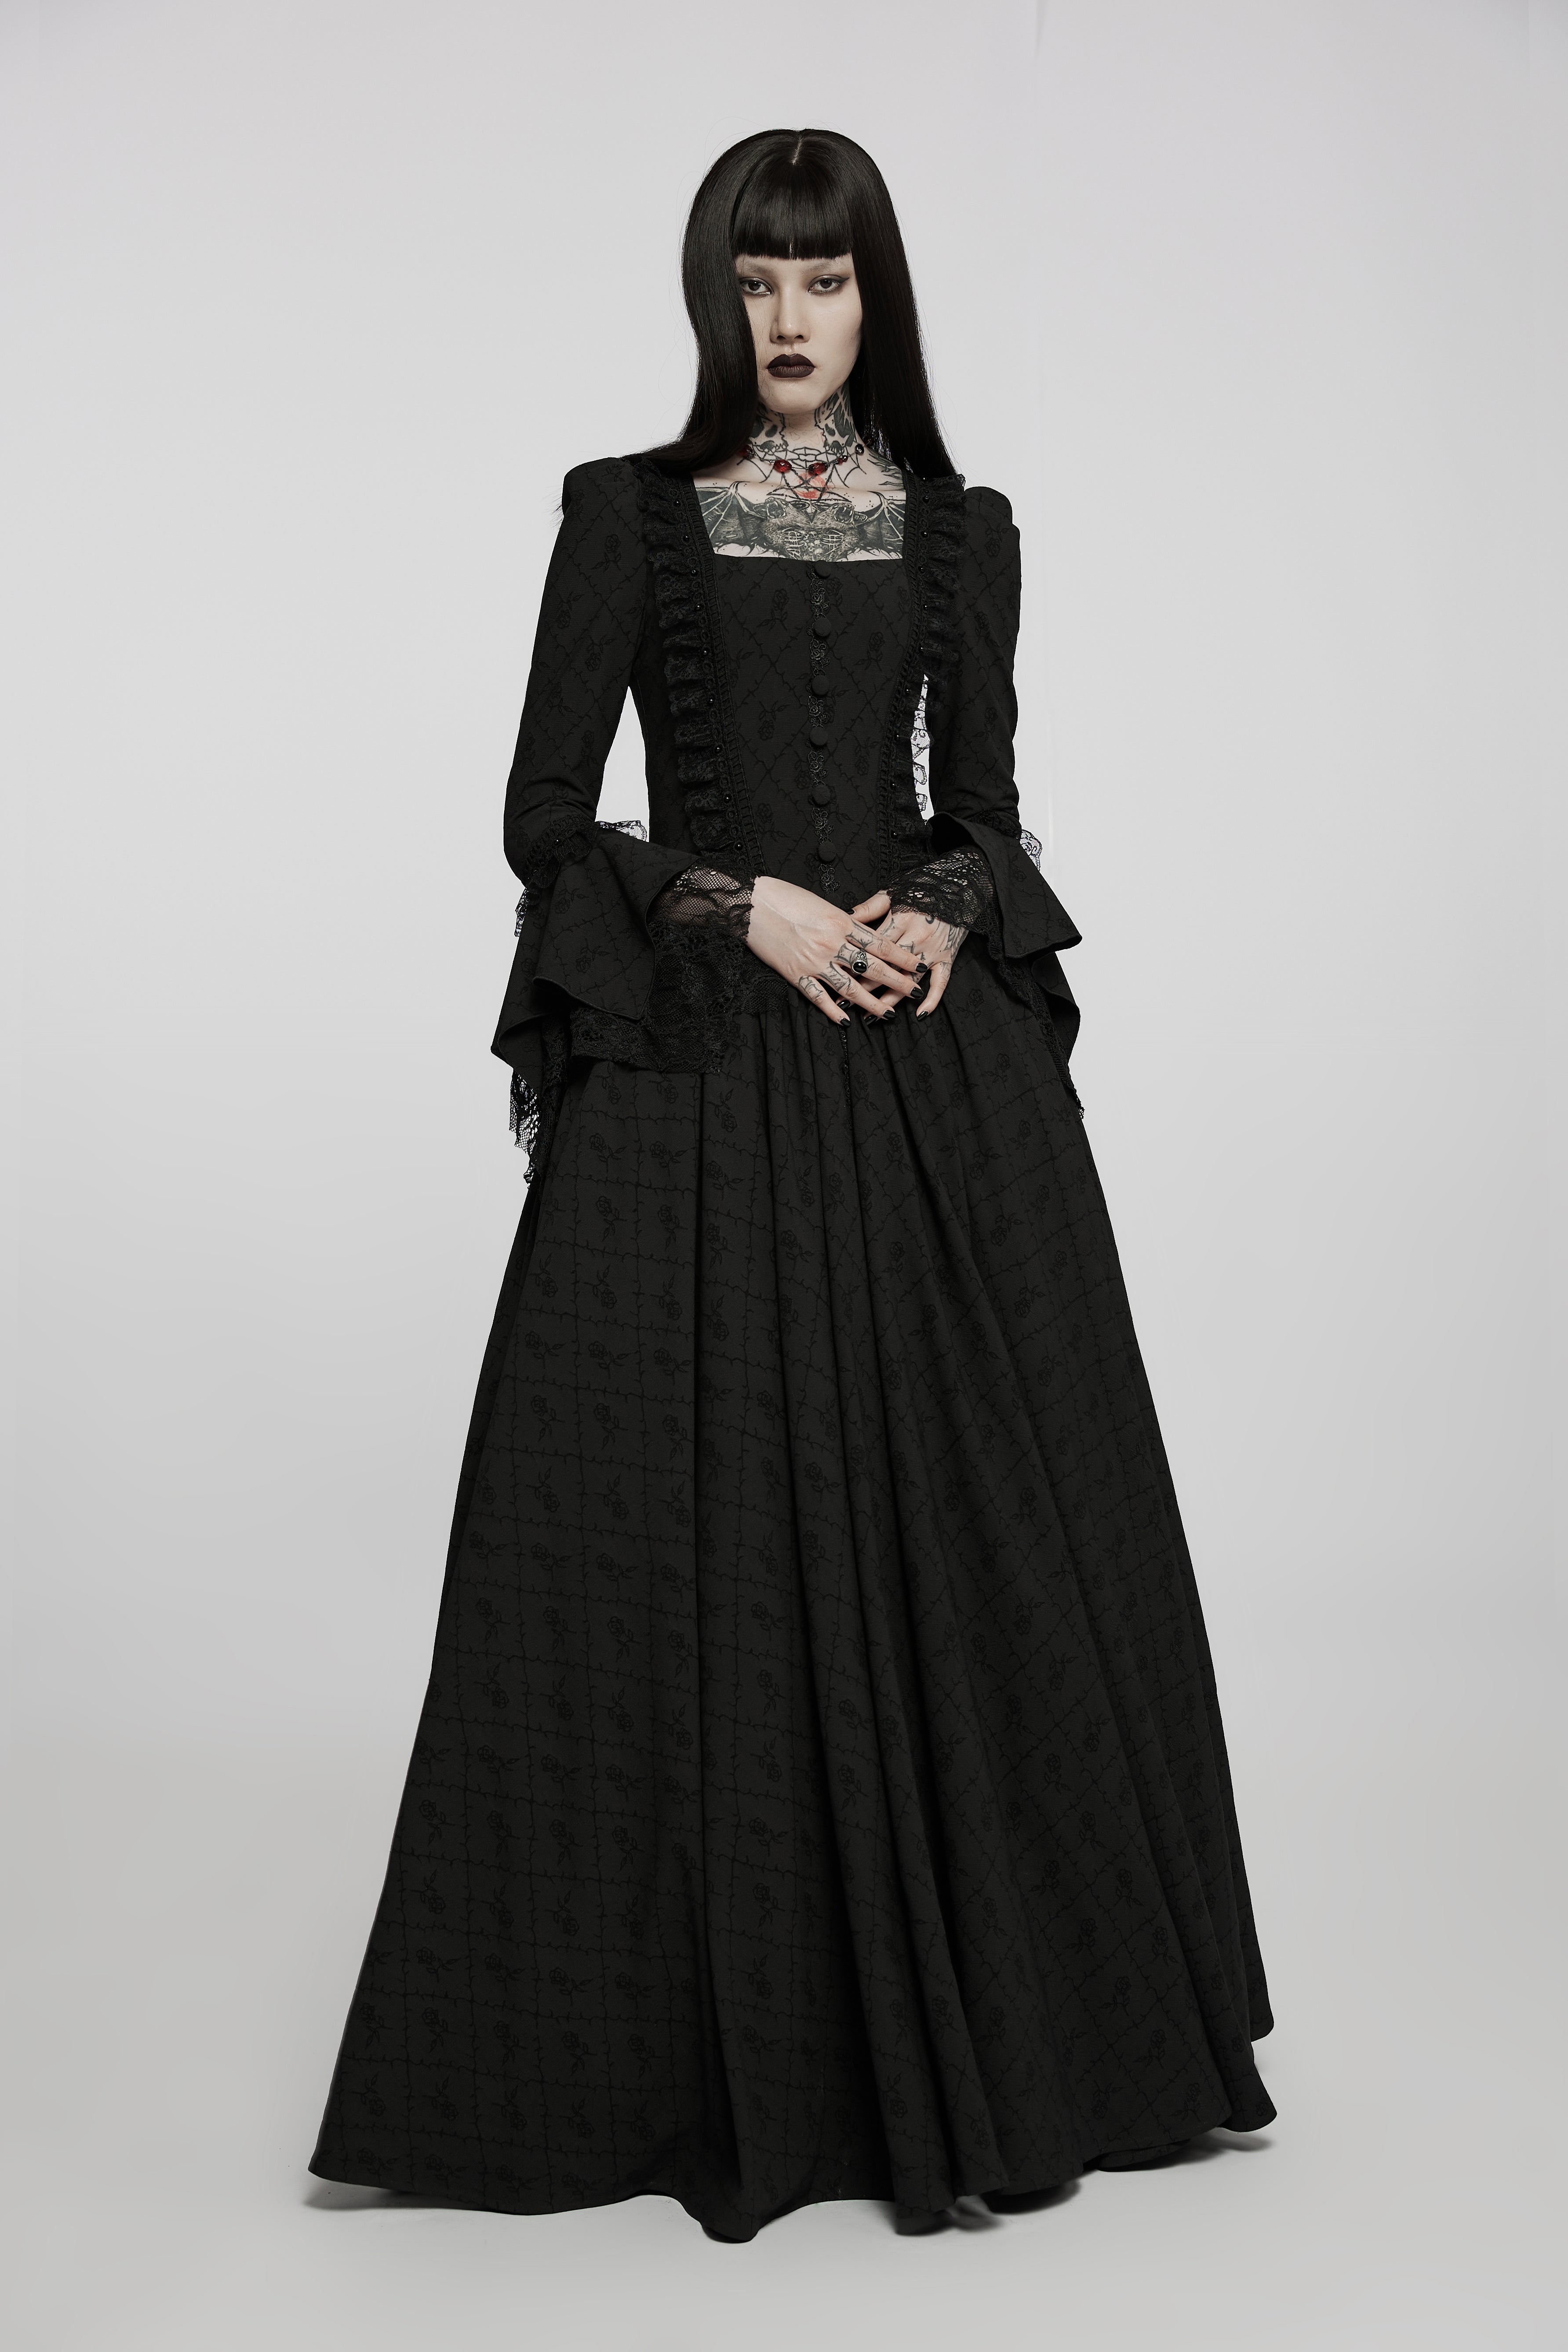 Gothic Dresses - Dark and Mystical – OtherWorld Fashion